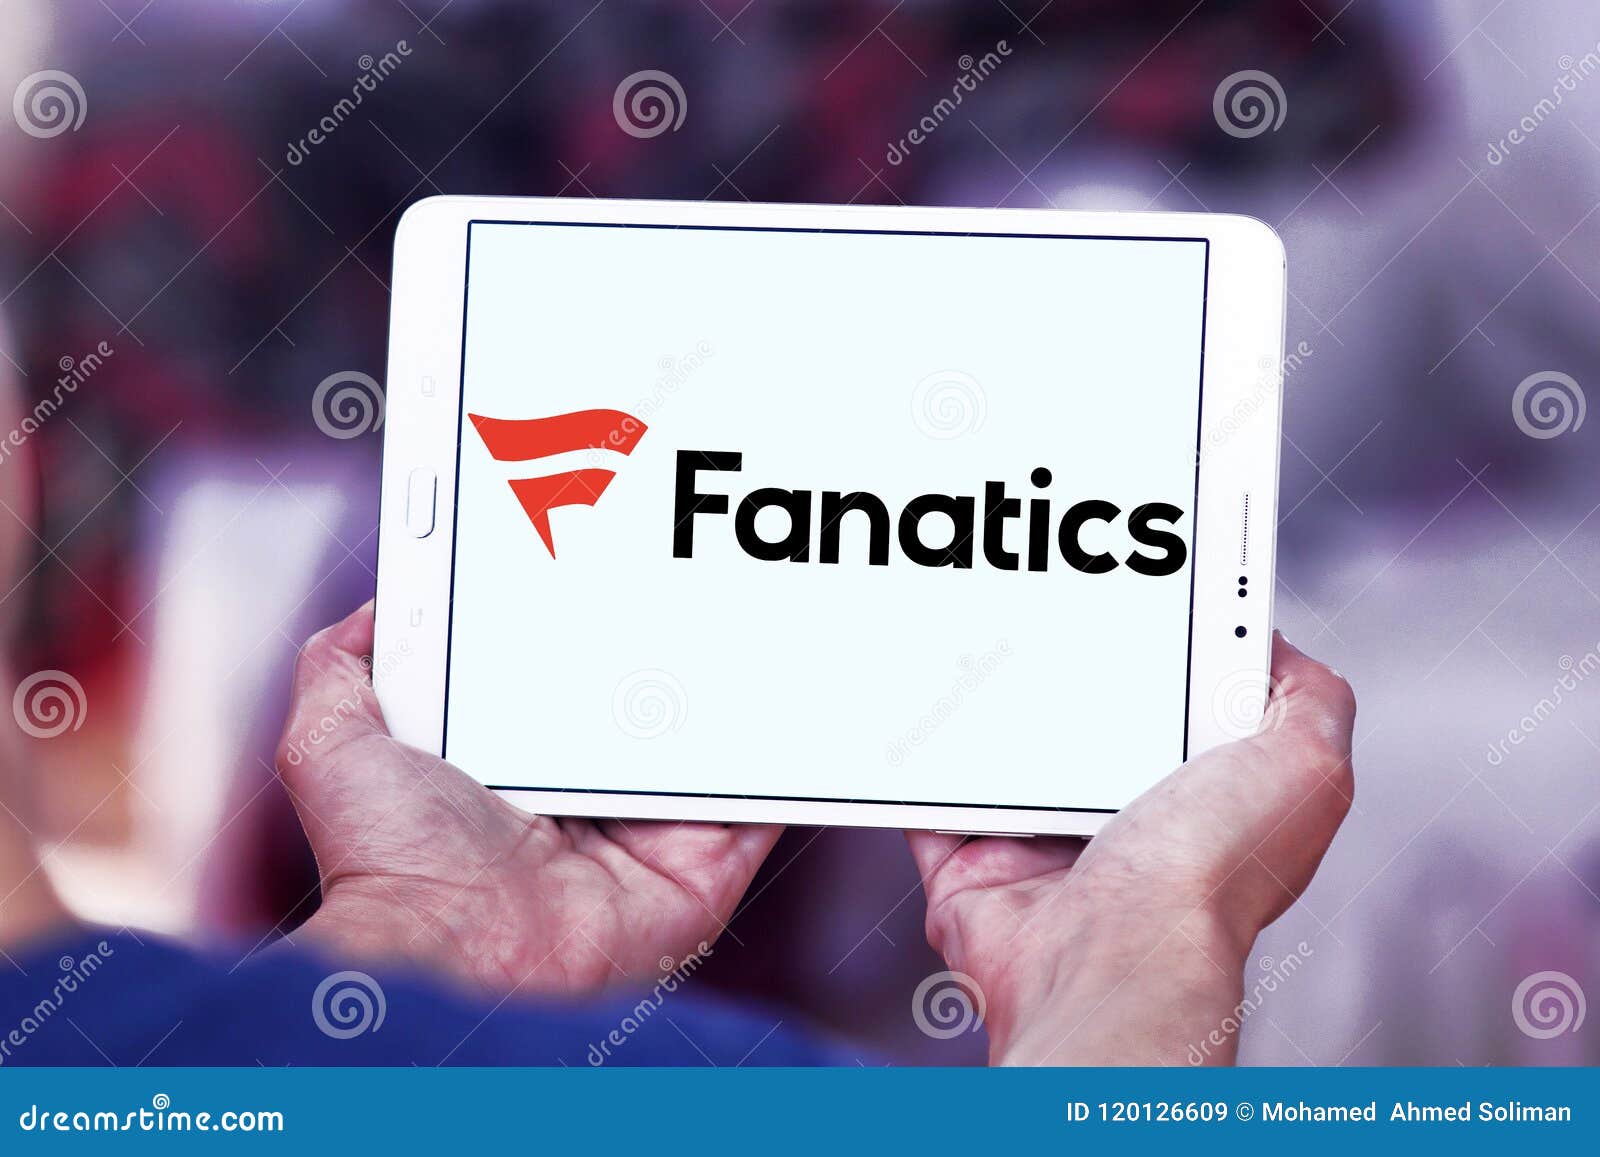 Fanatics Sports Retailer Logo Editorial Stock Image Image Of Icons Motto 120126609